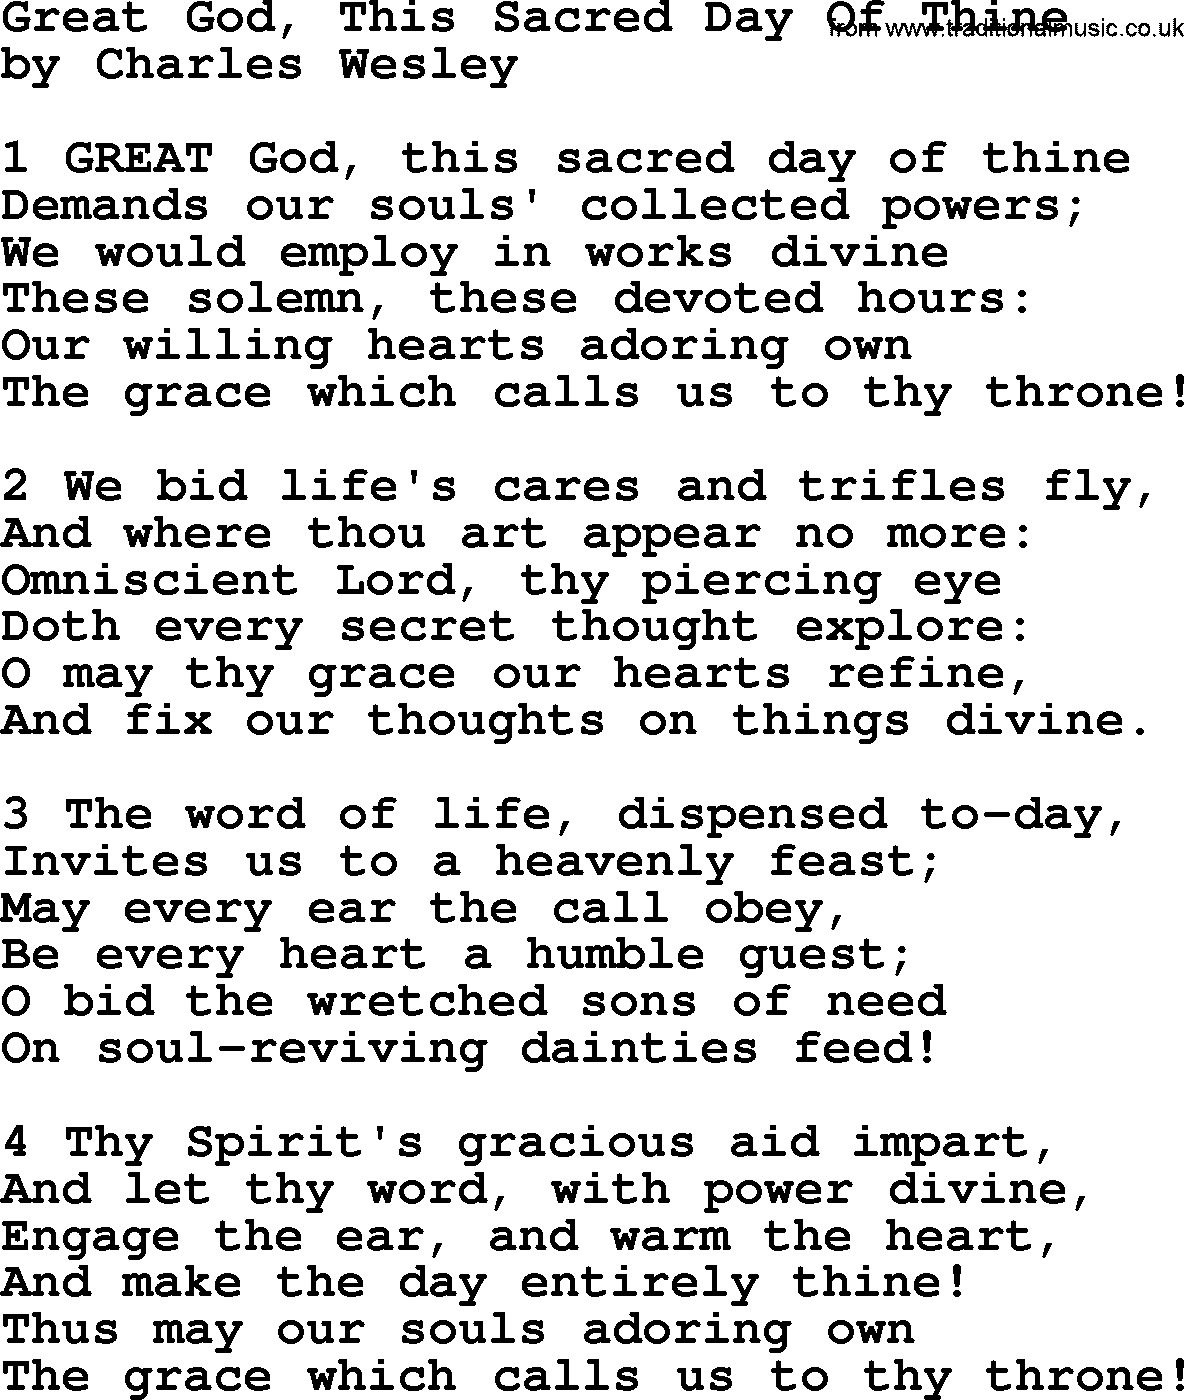 Charles Wesley hymn: Great God, This Sacred Day Of Thine, lyrics